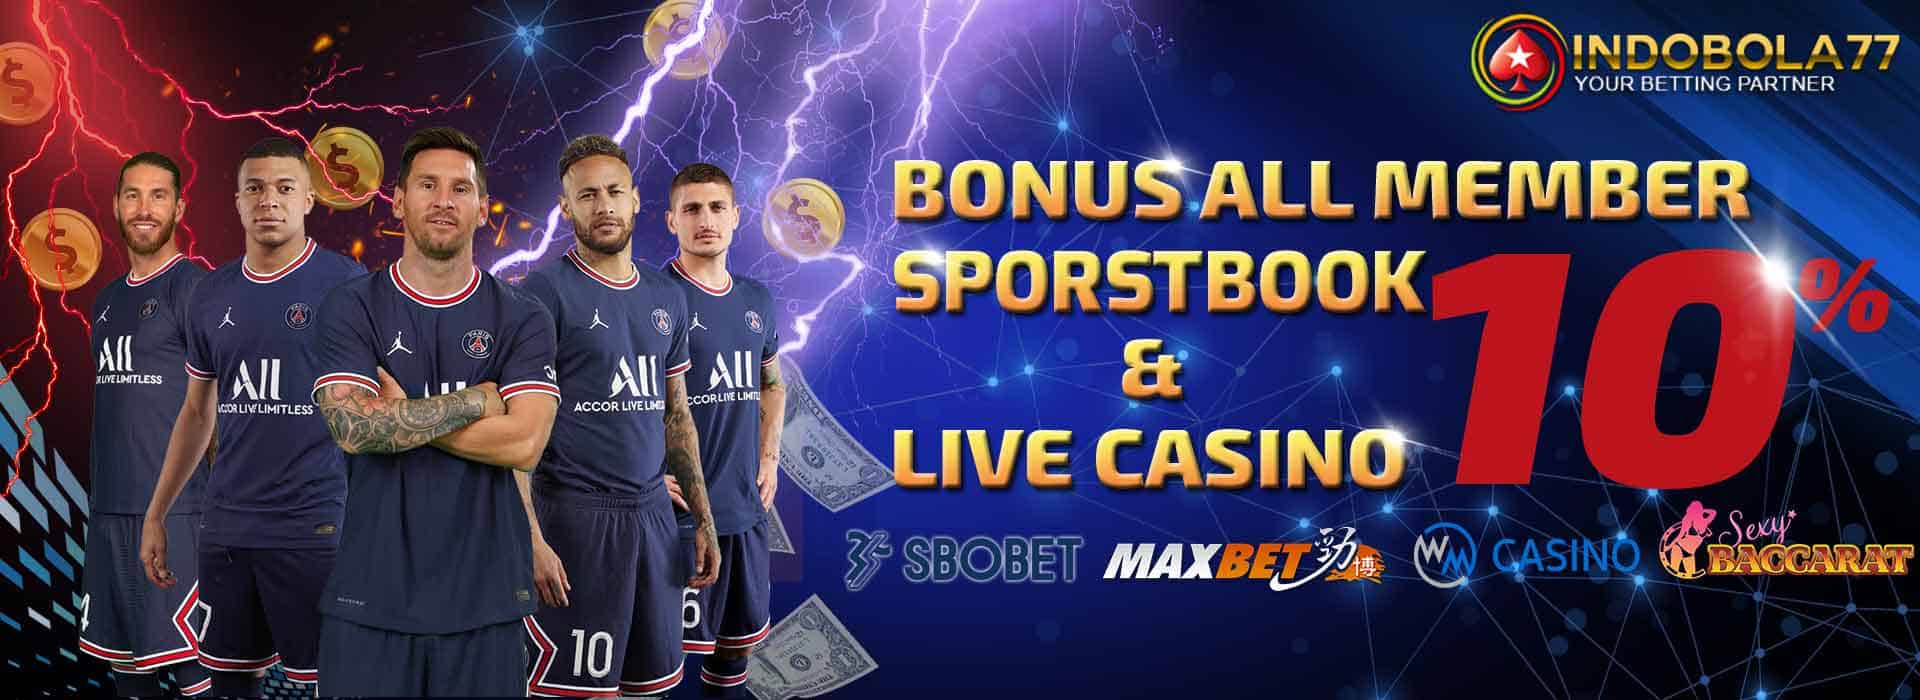 Bonus All Member Sportsbook & Live Casino